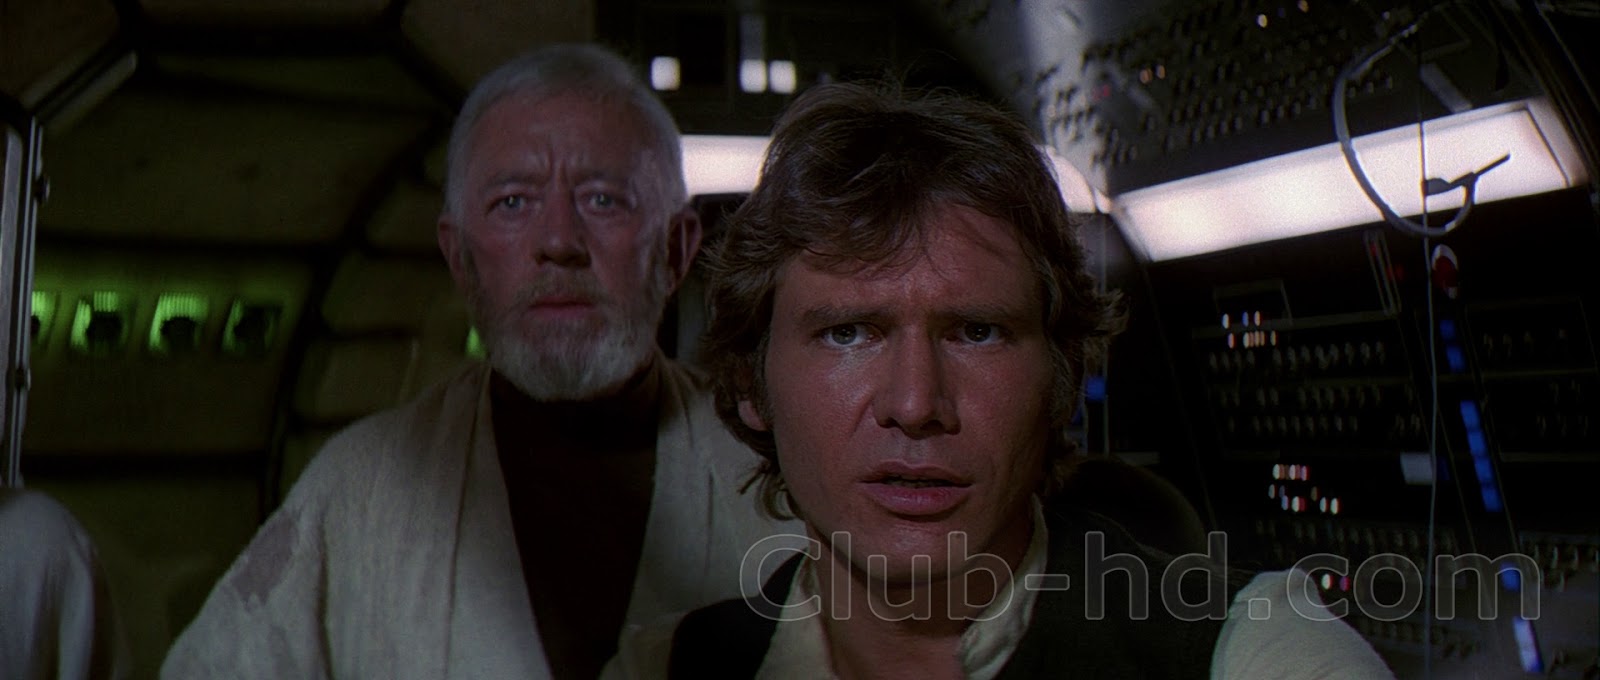 Star Wars: Episode IV A New Hope (1977) 1080p BDRip Dual Latino-Inglés [Subt. Esp-Ing] (Ciencia ficción. Aventura)